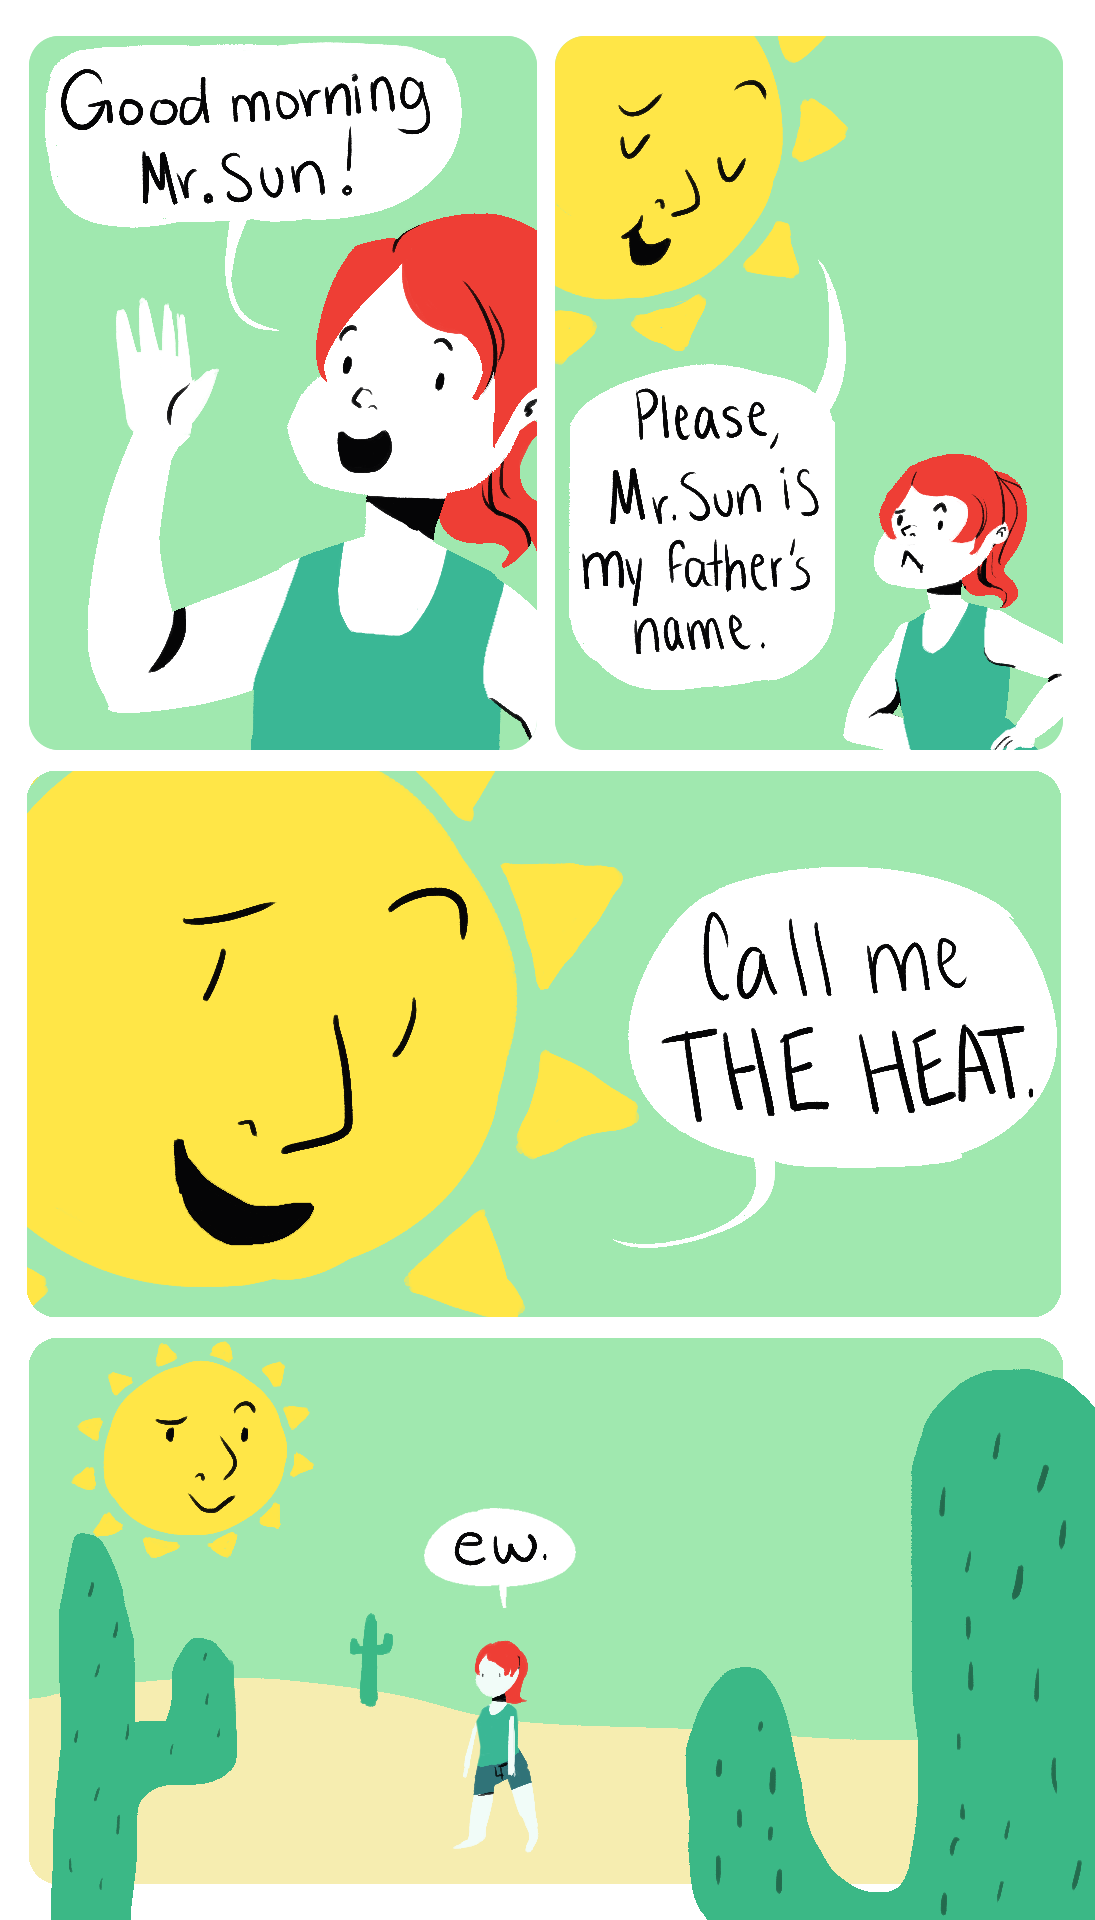 The heat